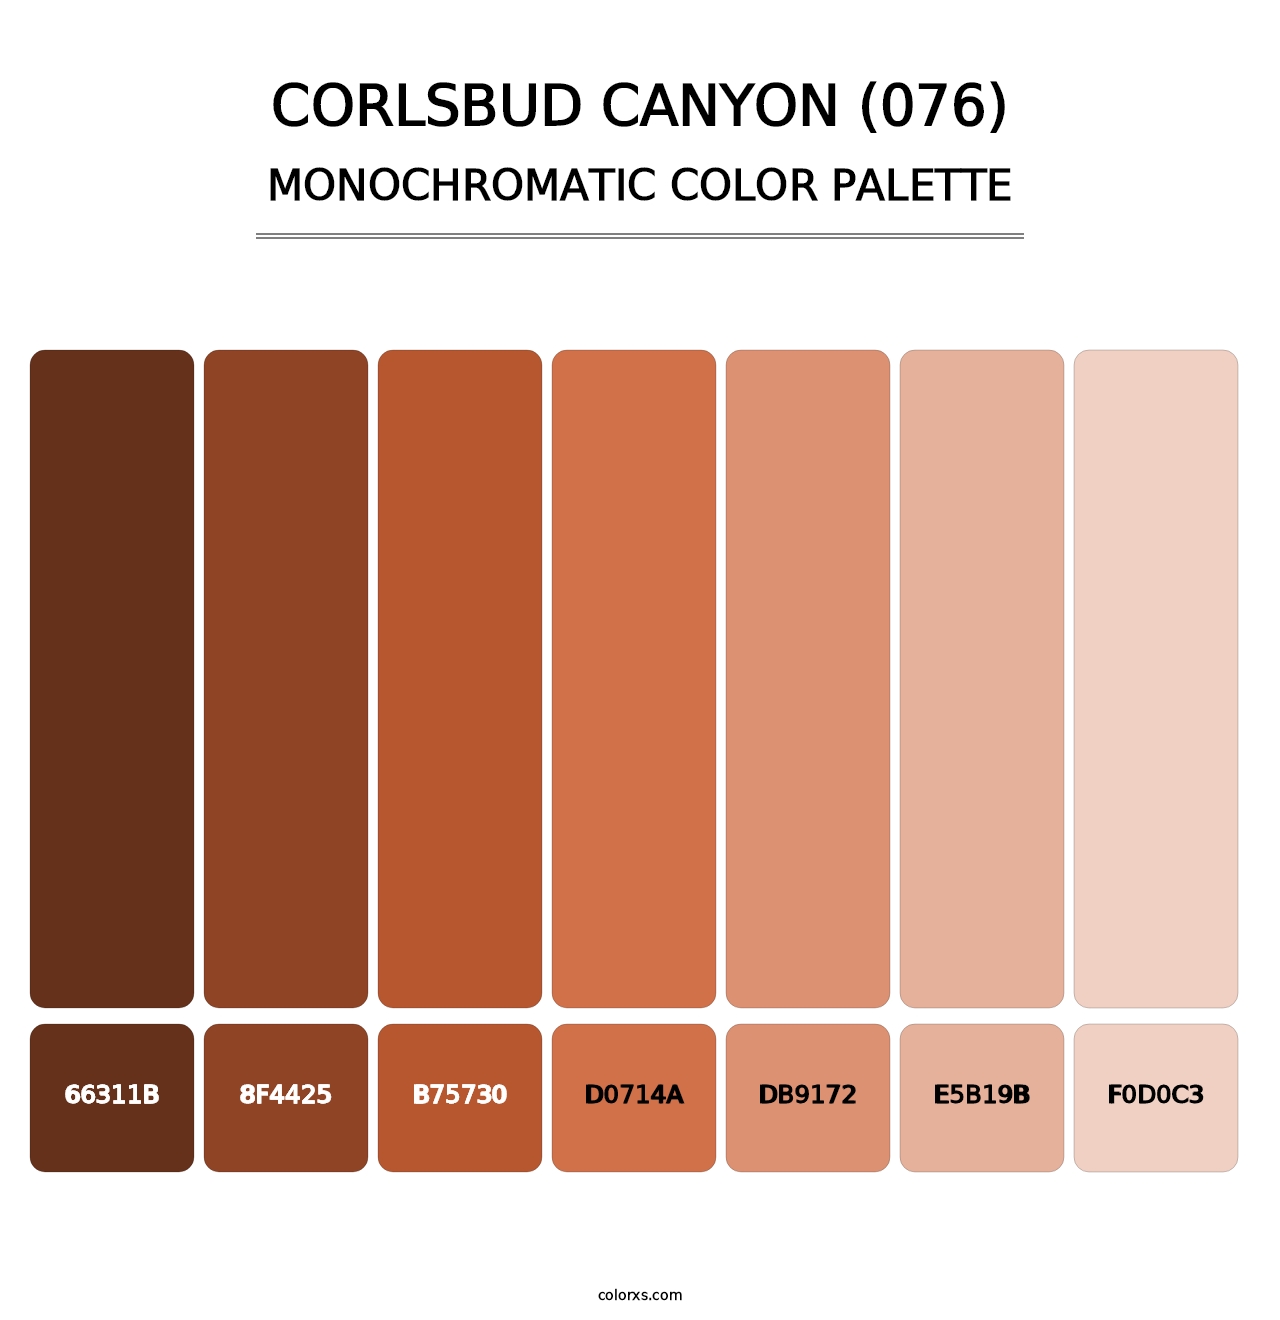 Corlsbud Canyon (076) - Monochromatic Color Palette